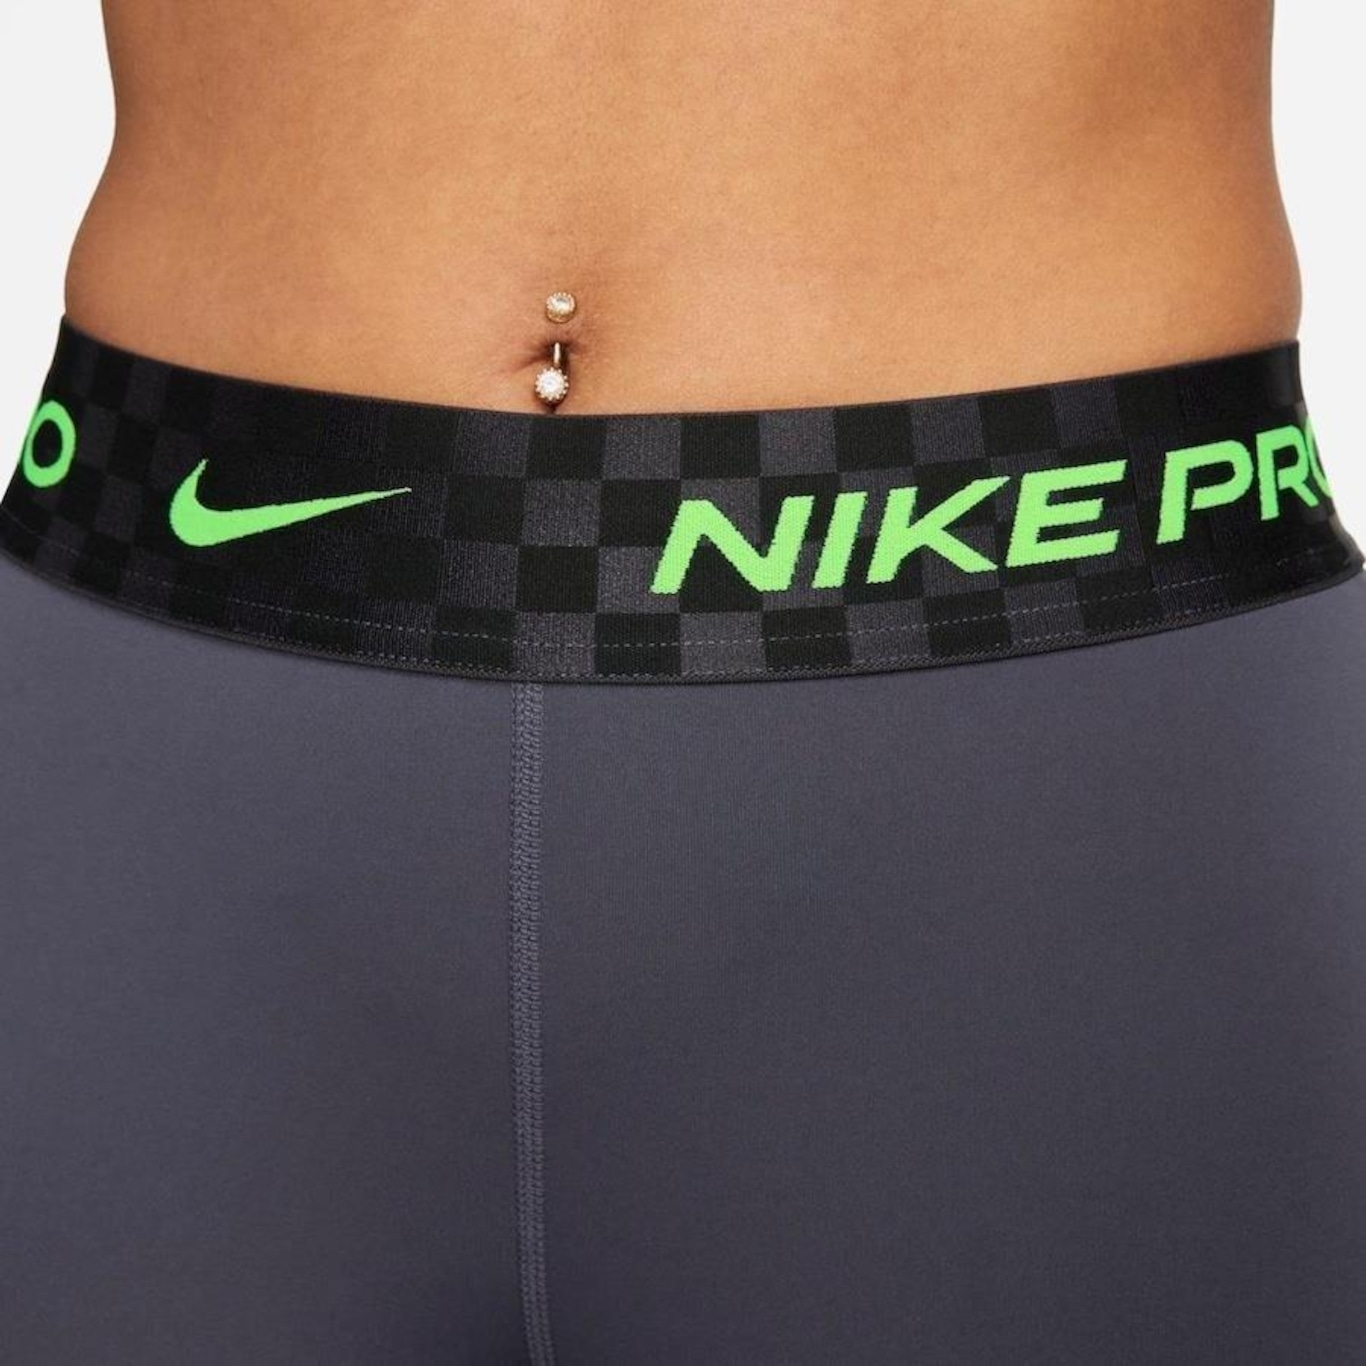 Nike Pro - Cinza - Leggings Fitness Mulher